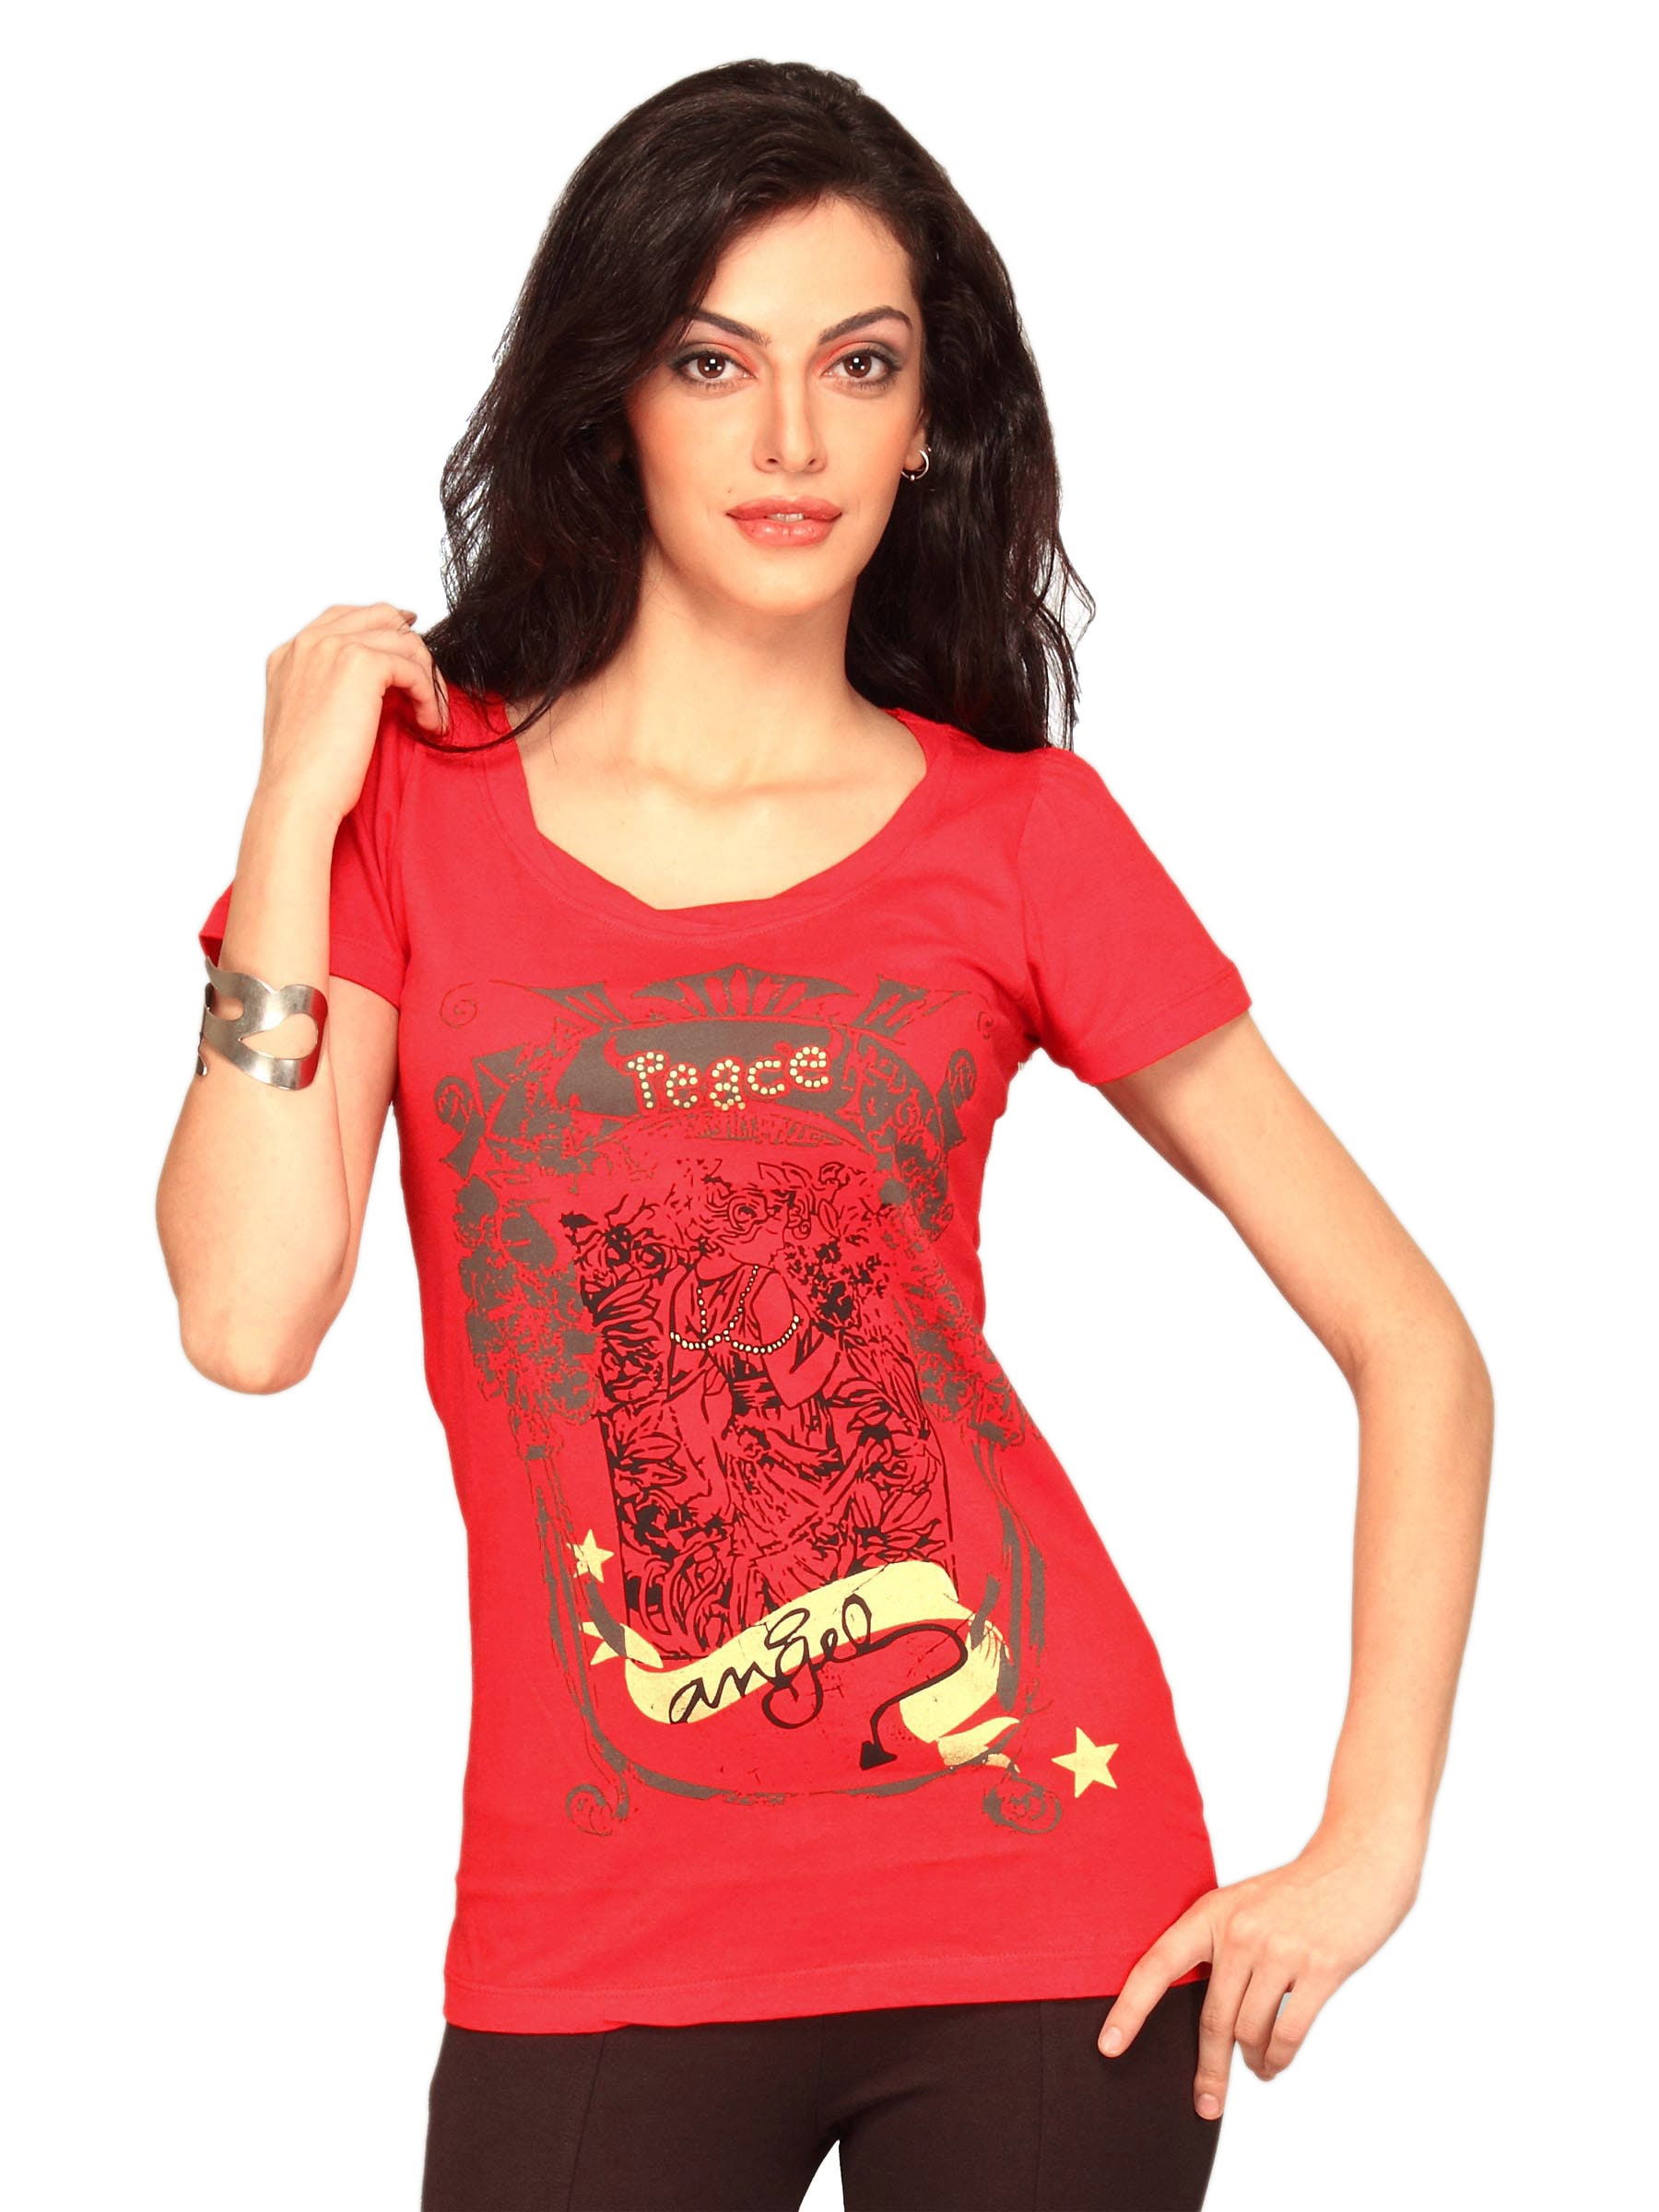 Jealous 21 Women's Red Peace T-shirt